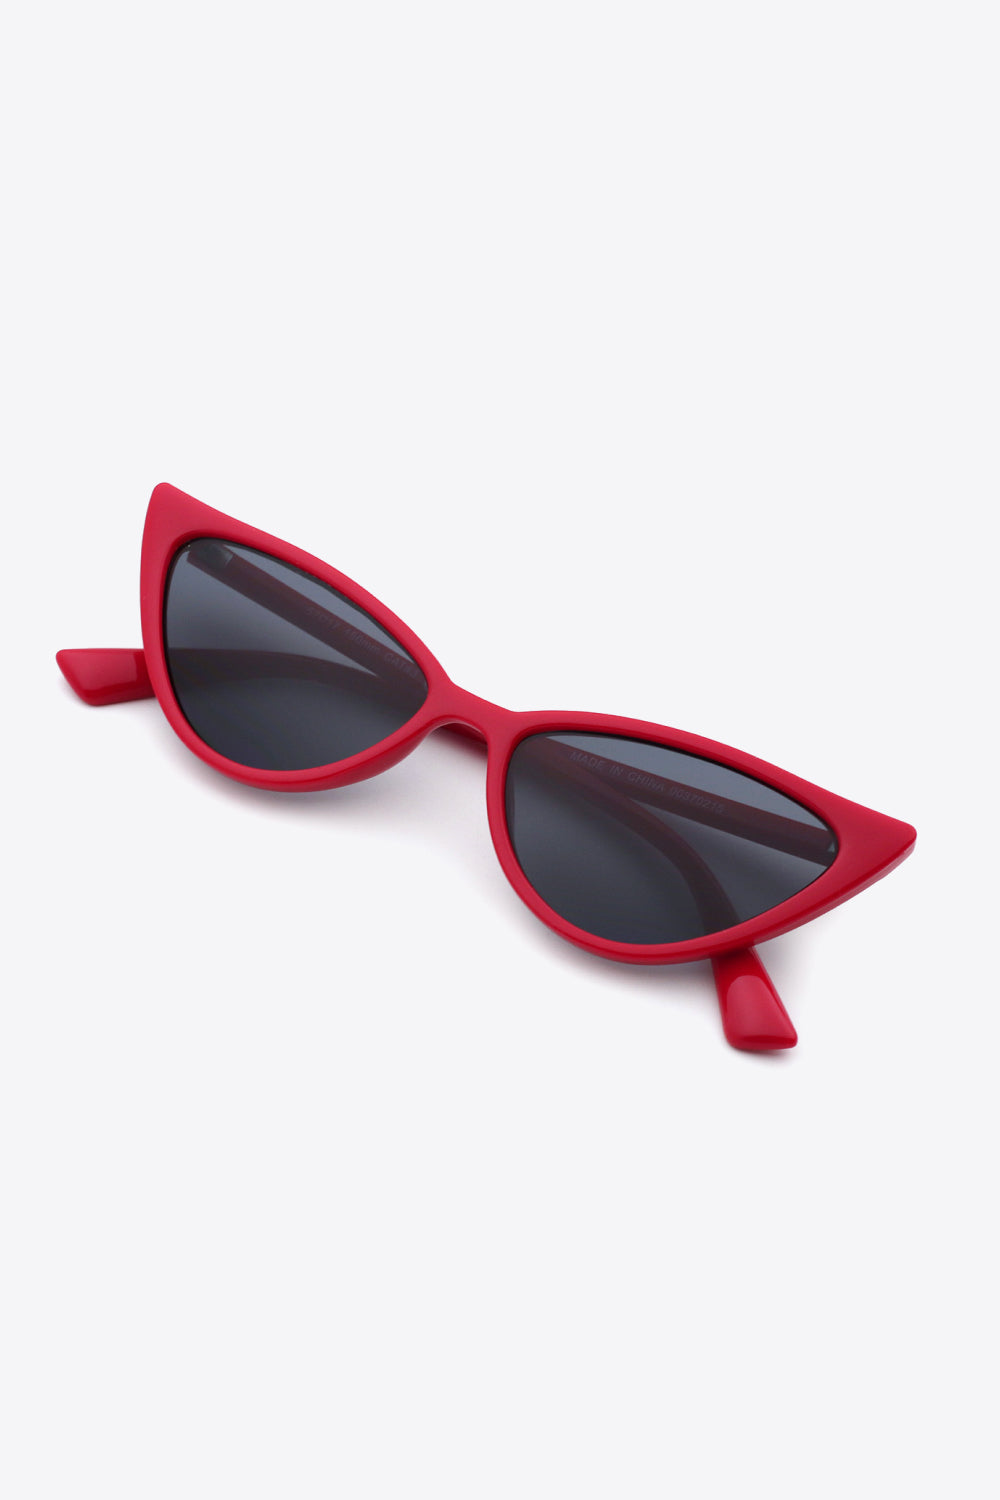 Uylee's Boutique Polycarbonate Cat-Eye Sunglasses